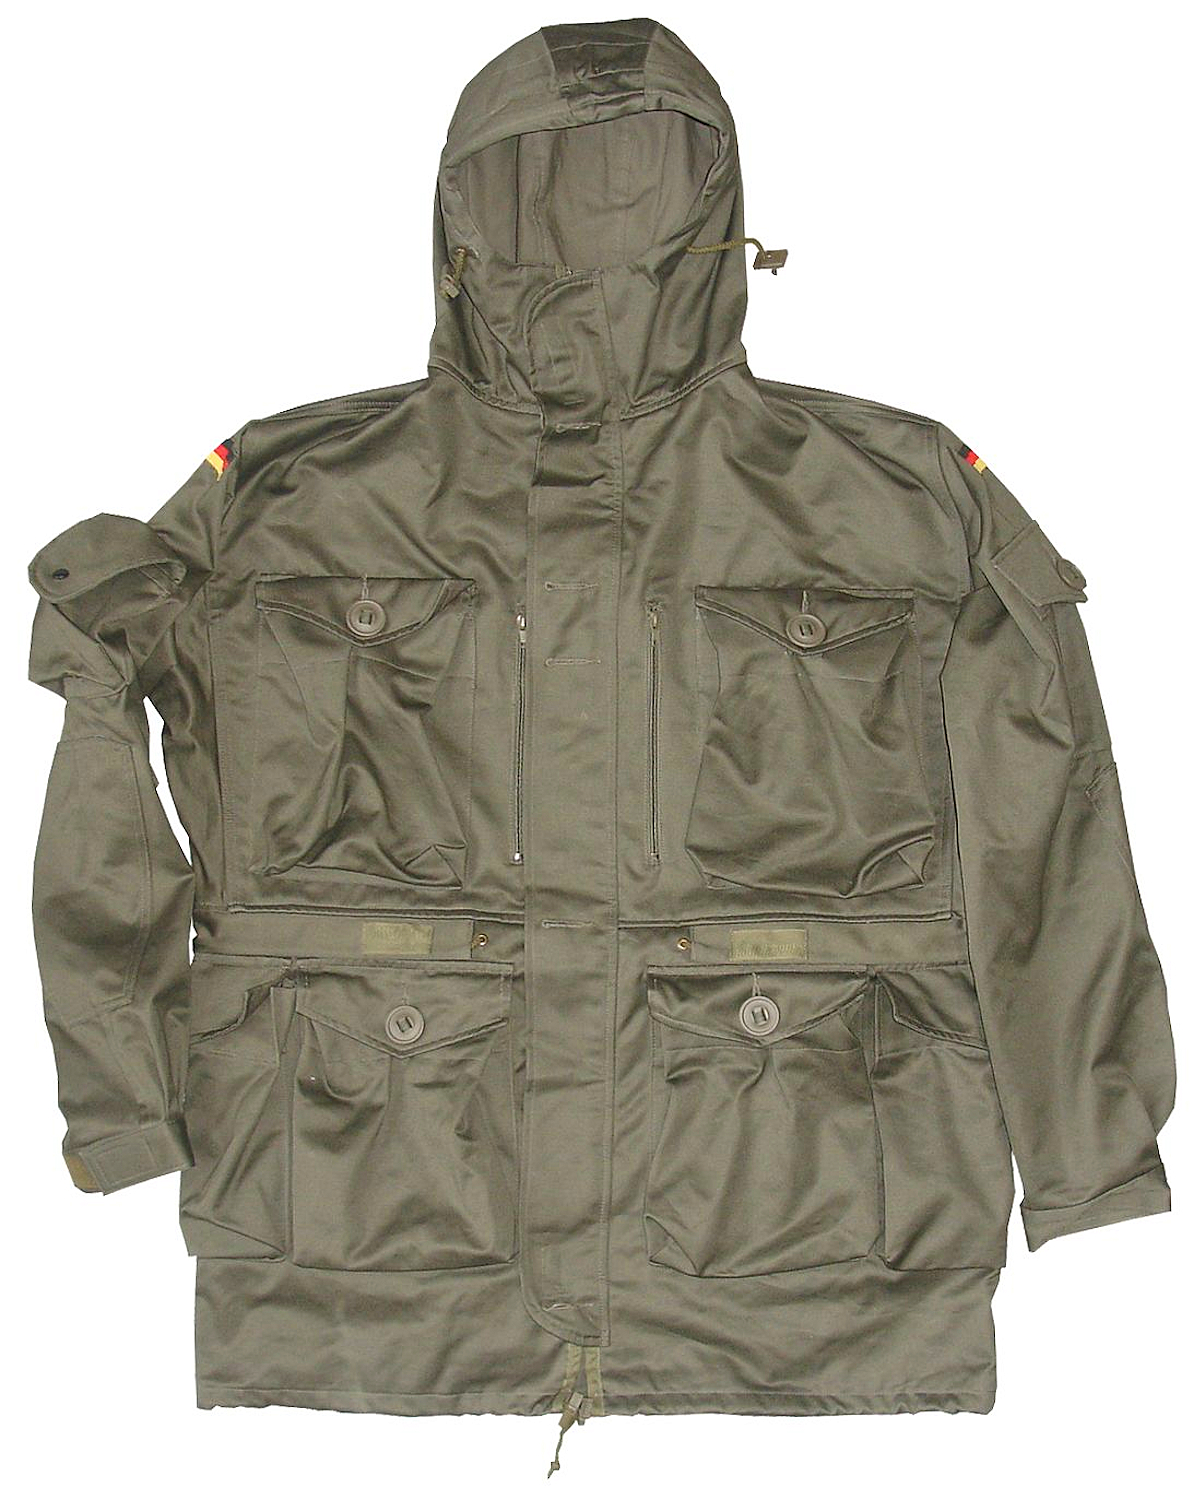 Leo Köhler Vintage Jacke Sweatjacke Outdoor Army